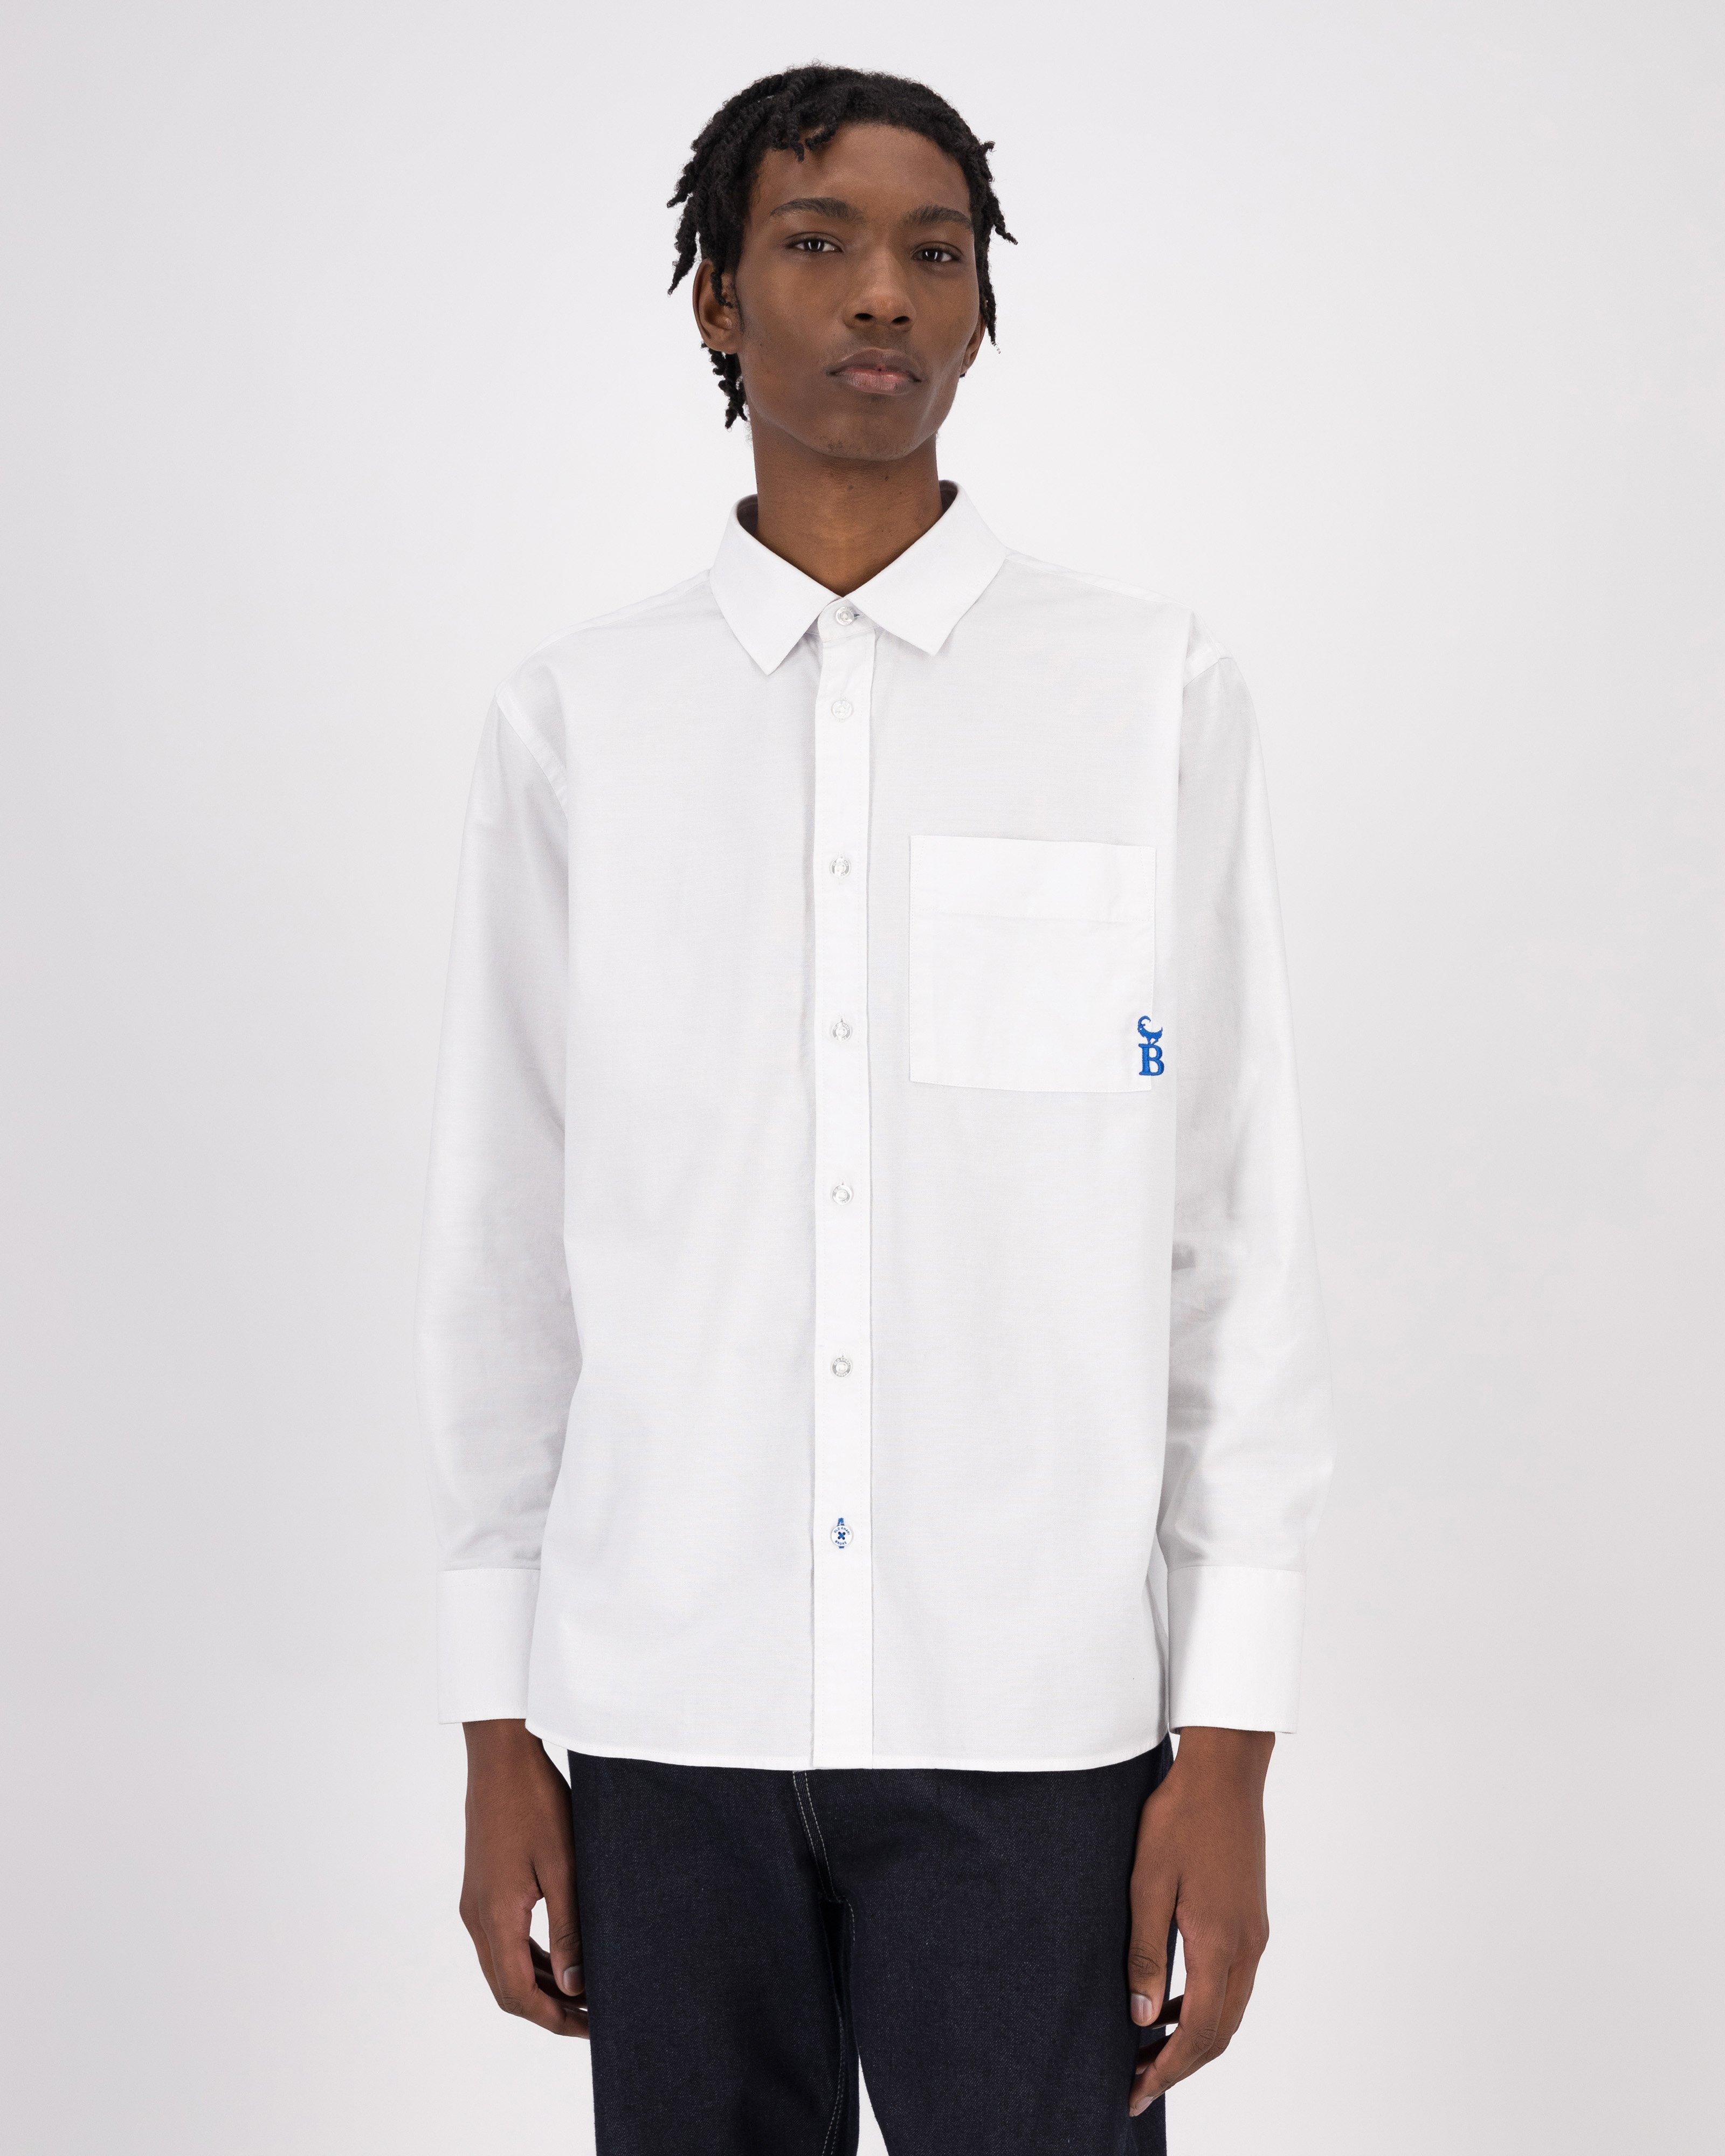 BROKE x Old Khaki Unisex White Shirt | Old Khaki